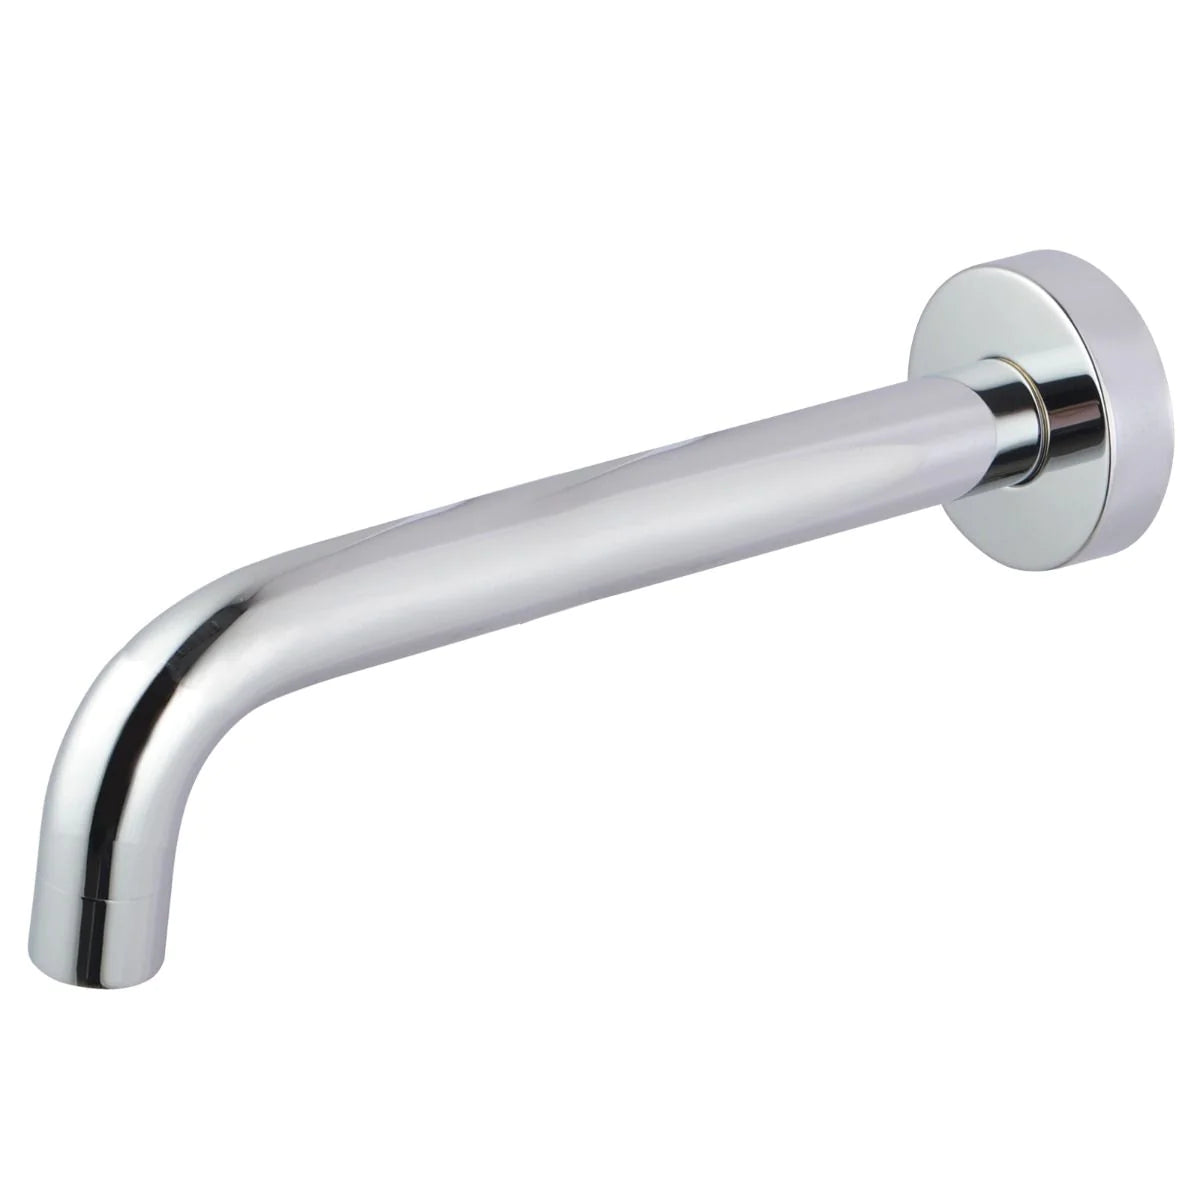 Pentro Round Bath Spout - SP12: Modern, minimalist design for enhancing your bathroom space-SP12.01